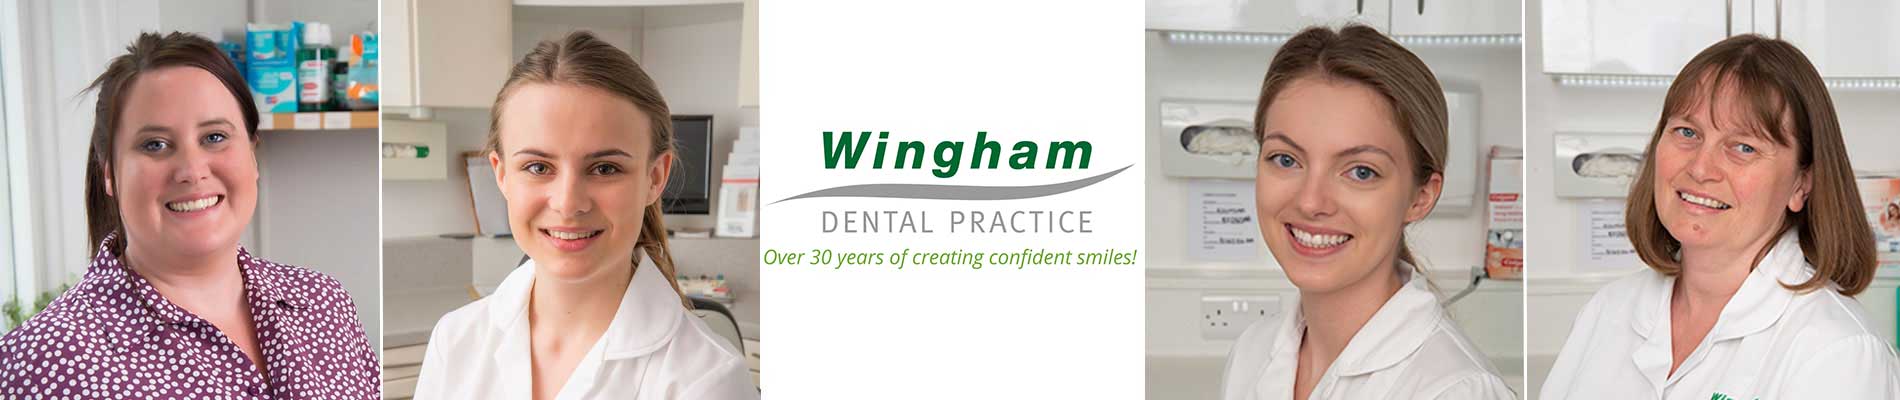 Wingham Dental Practice